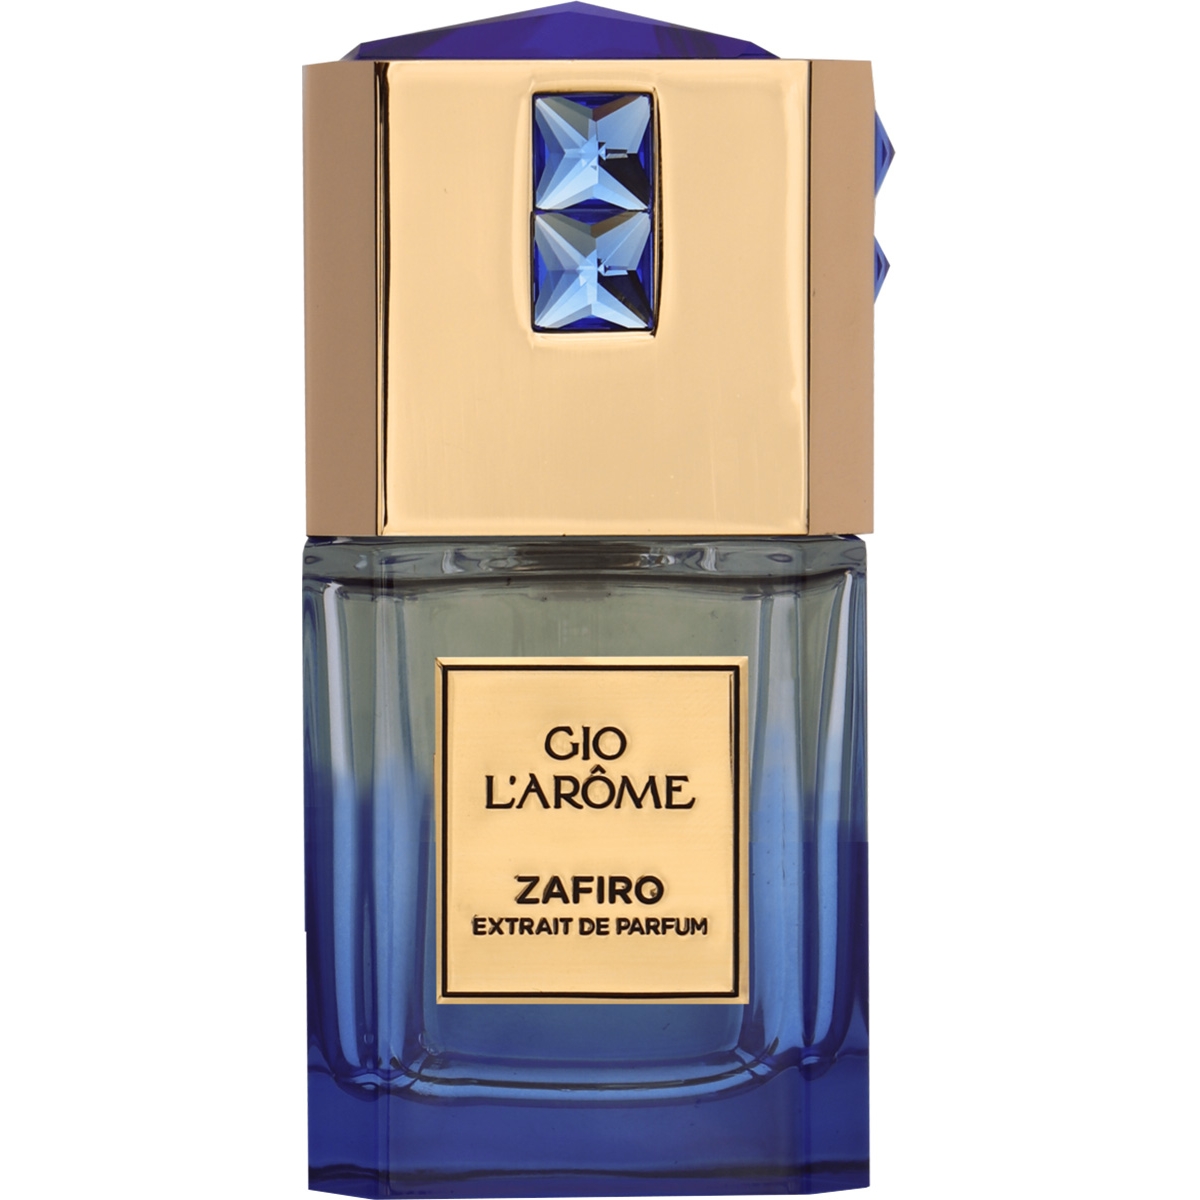 Zafiro Gio L'Arome Perfumes, Profumi Unisex, Arada Perfumes